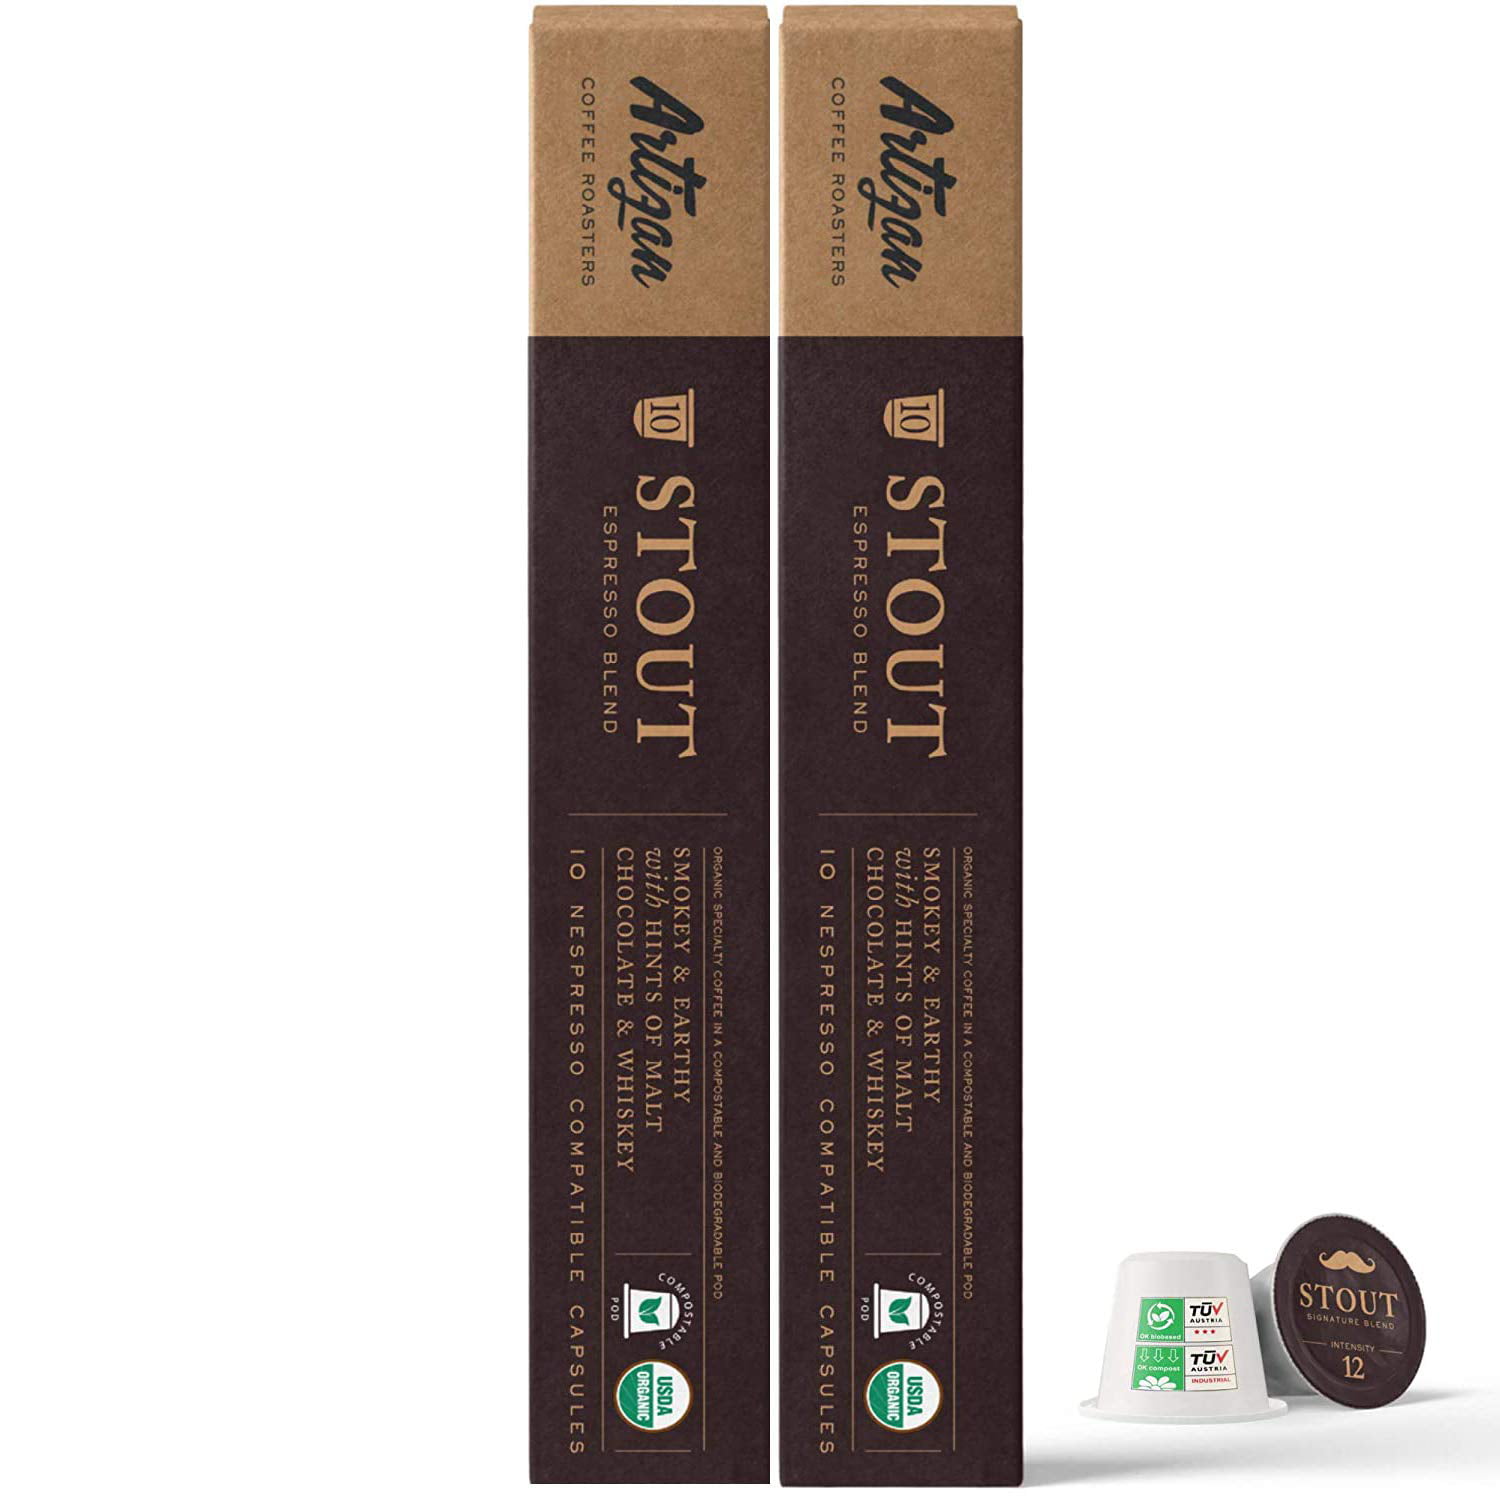 World's Strongest Coffee - Espresso Blend - USDA Certified Organic Nespresso Capsules - (20 Pods) - Walmart.com